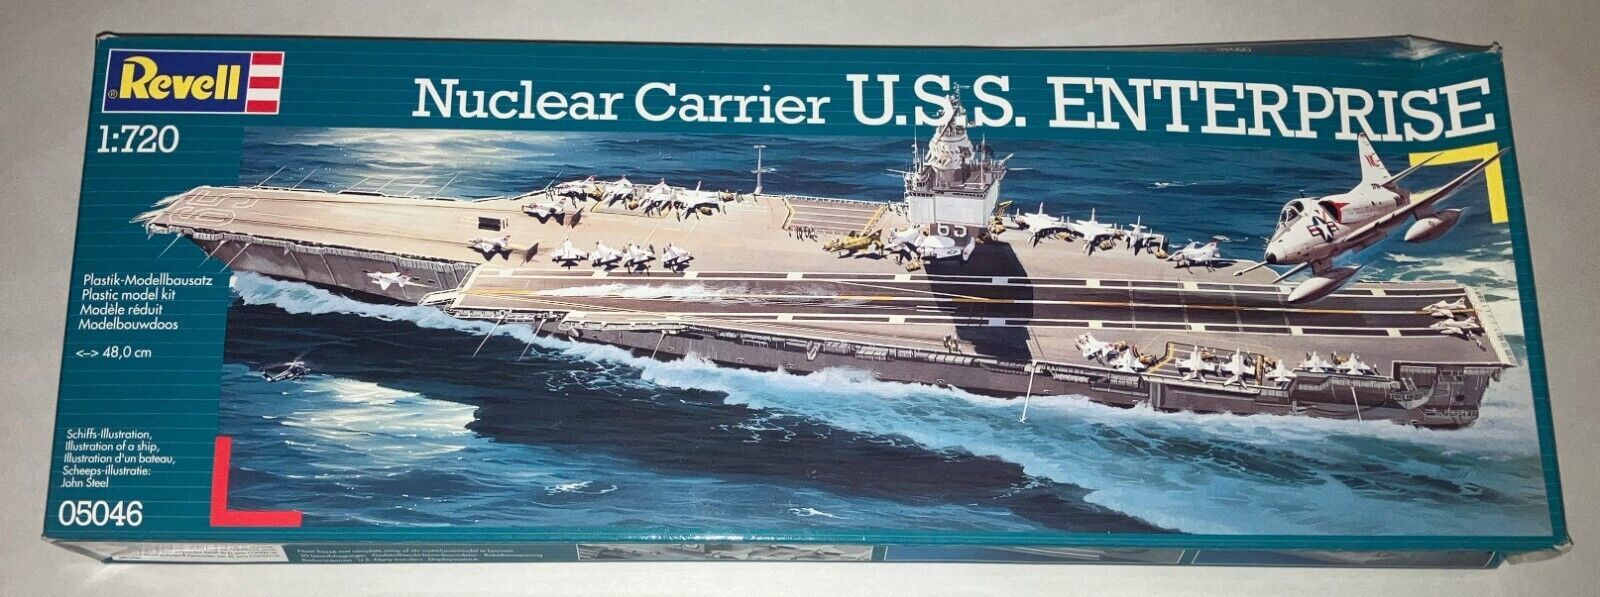 Revell DAMAGED BOX USS Enterprise Nuclear Aircraft Carrier 1:720 ship model kit